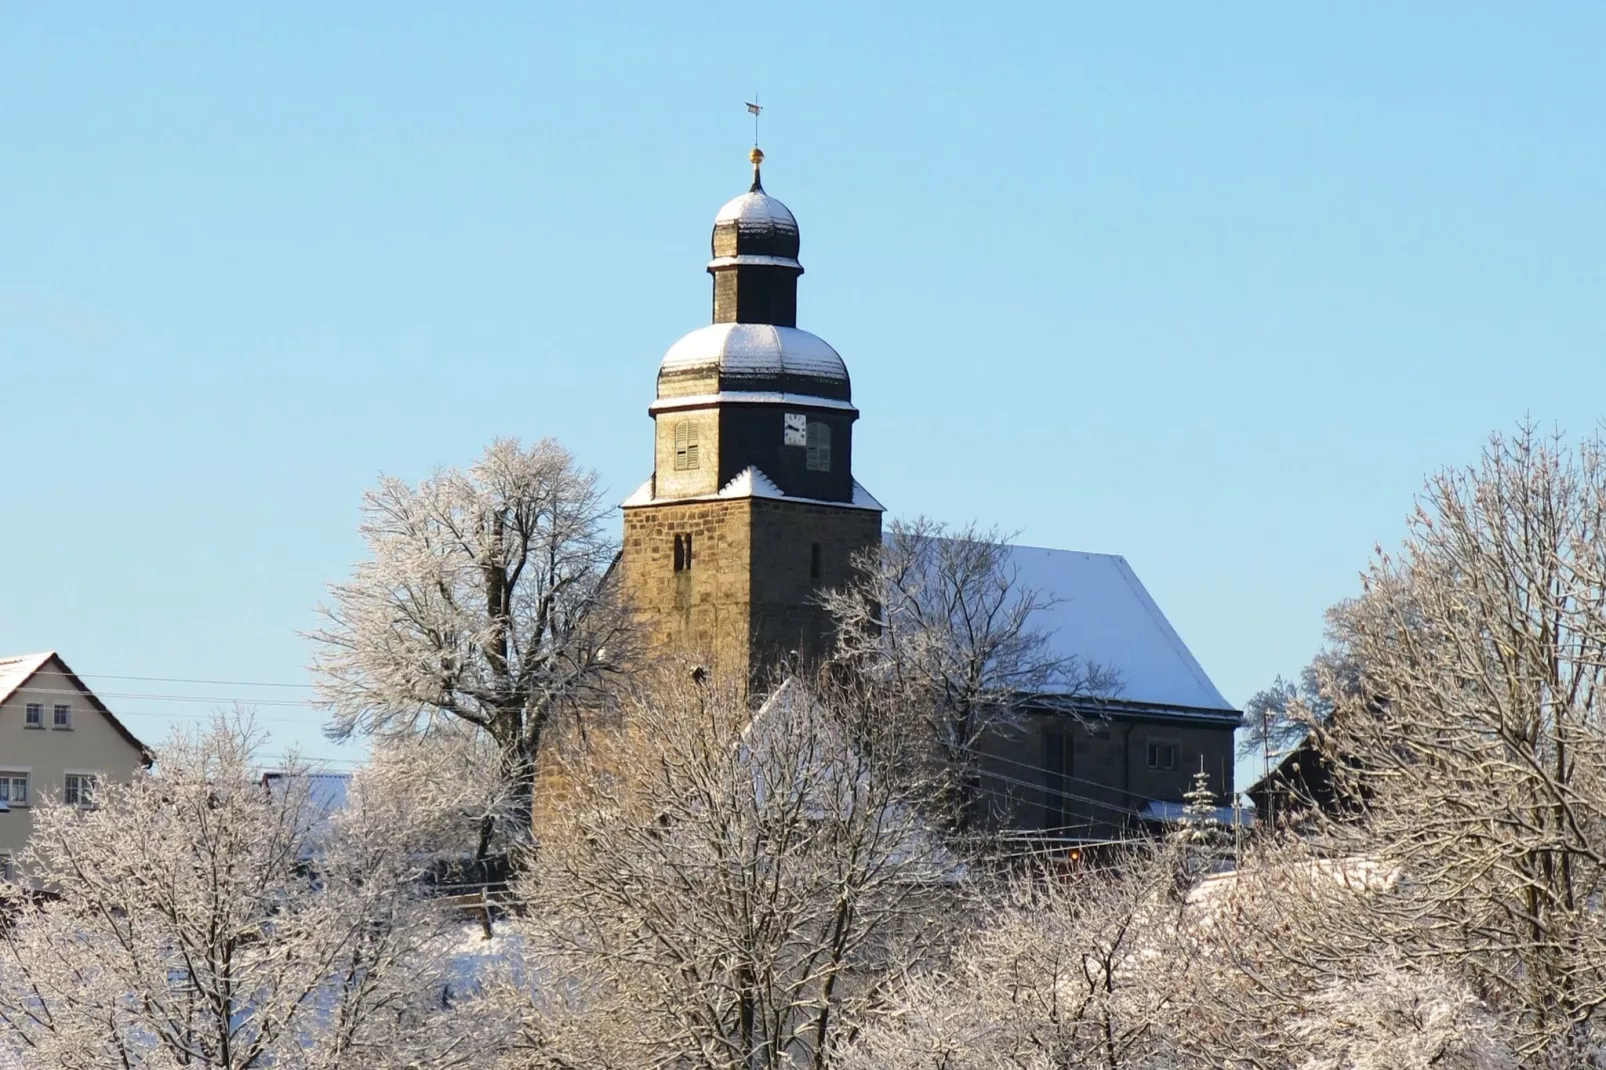 Burggrub-Gebied winter 5km